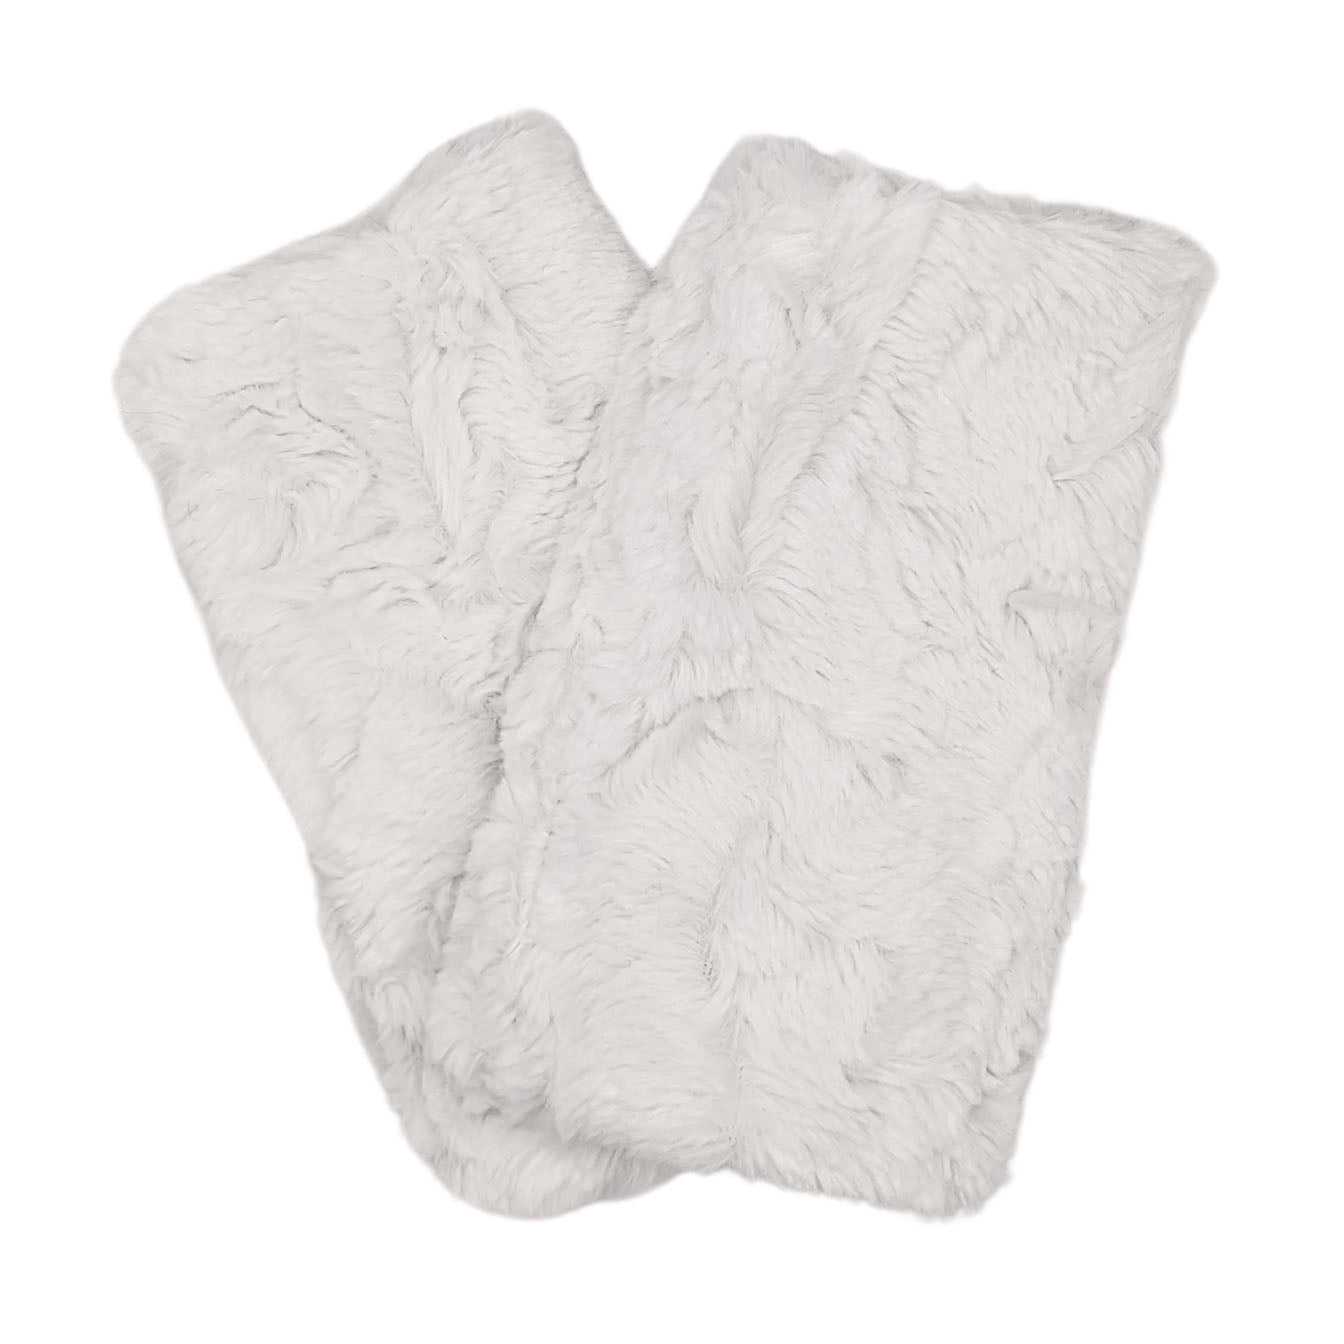 Men's Fingerless Gloves | Cuddly Faux Fur in Ivory | Handmade by Pandemonium Millinery Seattle, WA USA